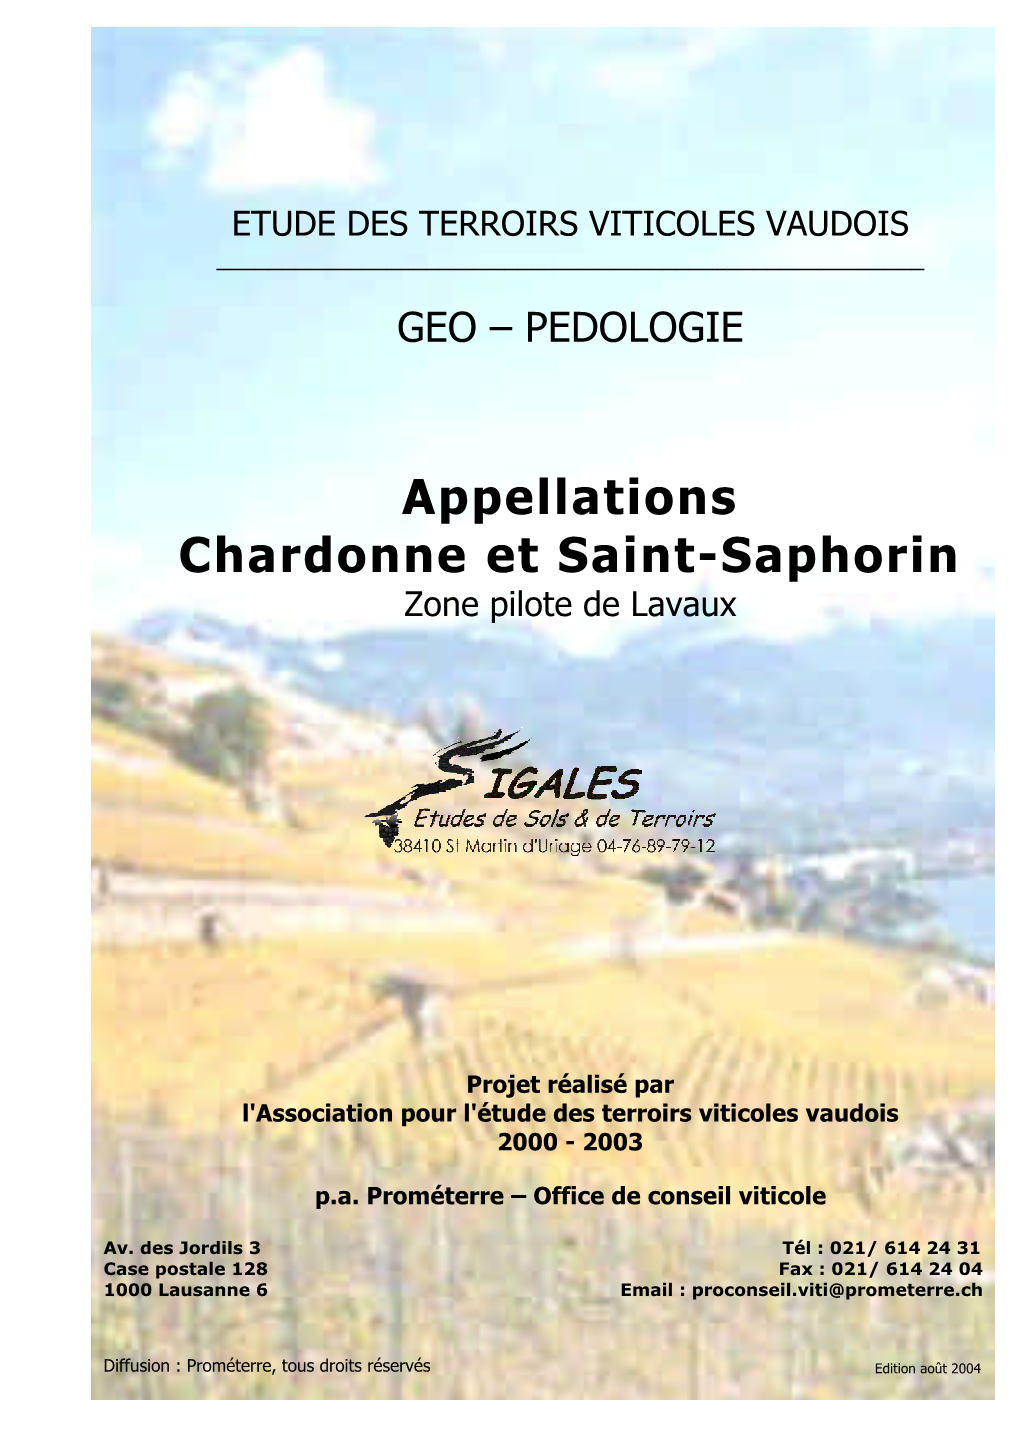 Chardonne, St-Saphorin